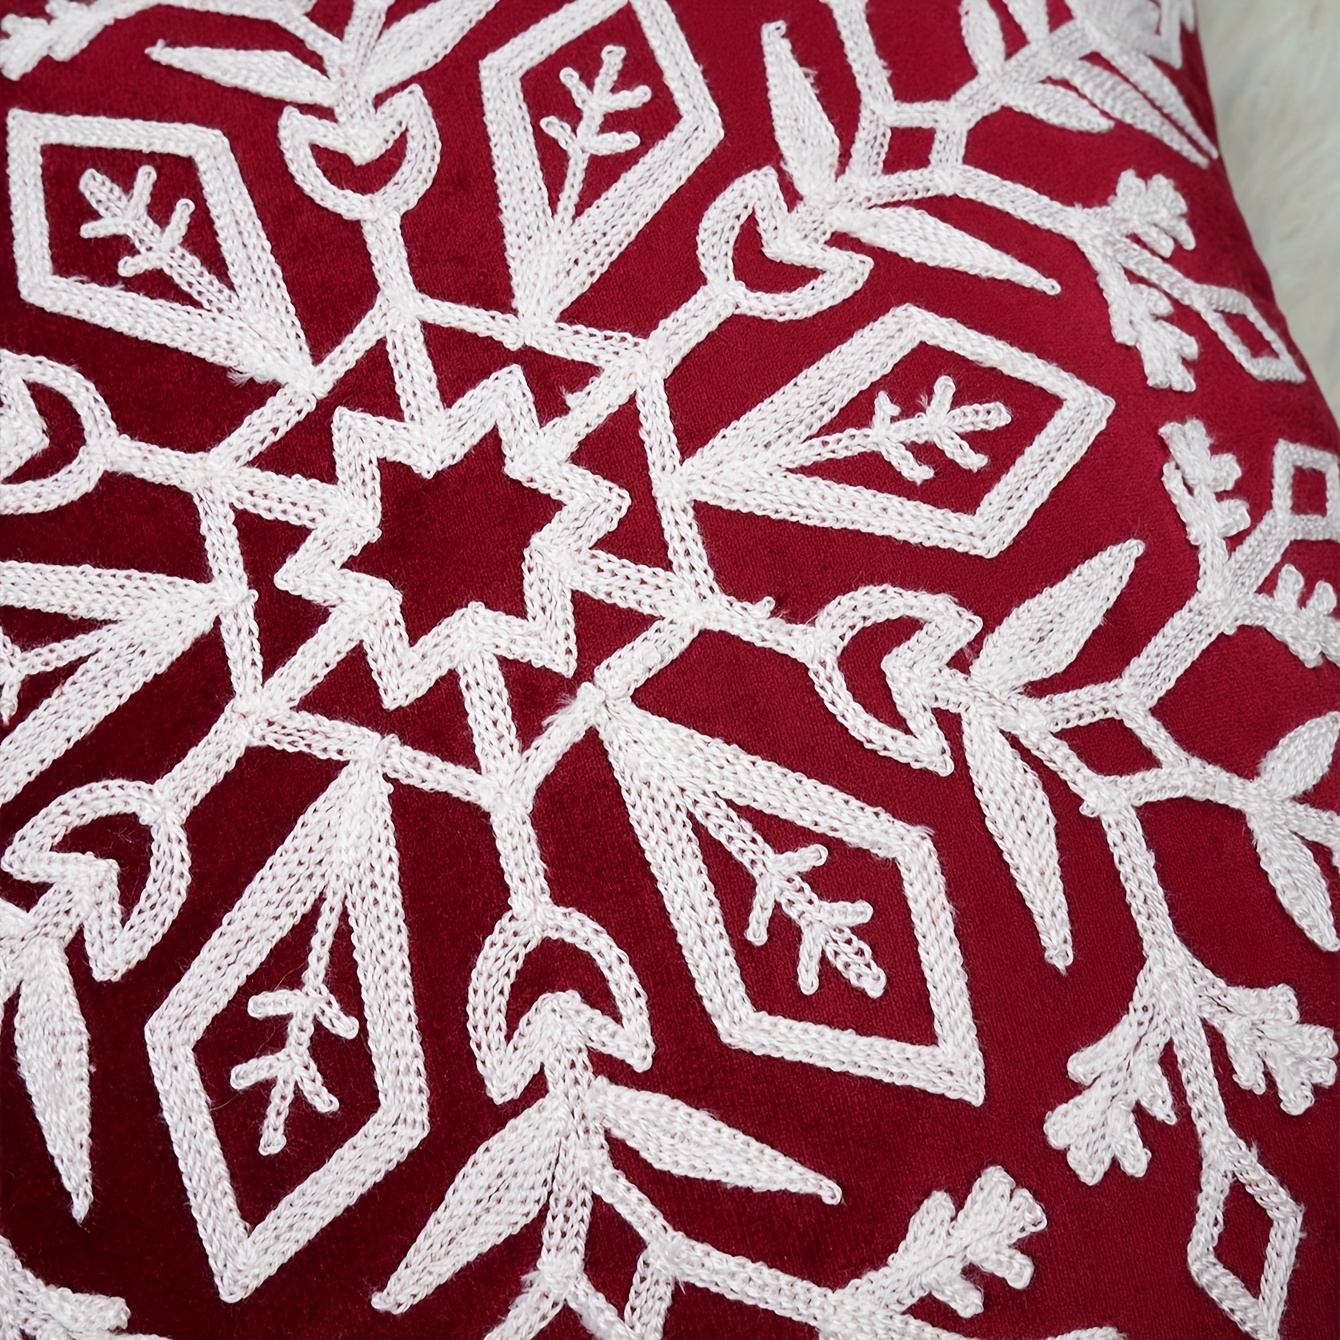 1pc Snowflake Embroidery Pillowcase, Soft Velvet Fabric